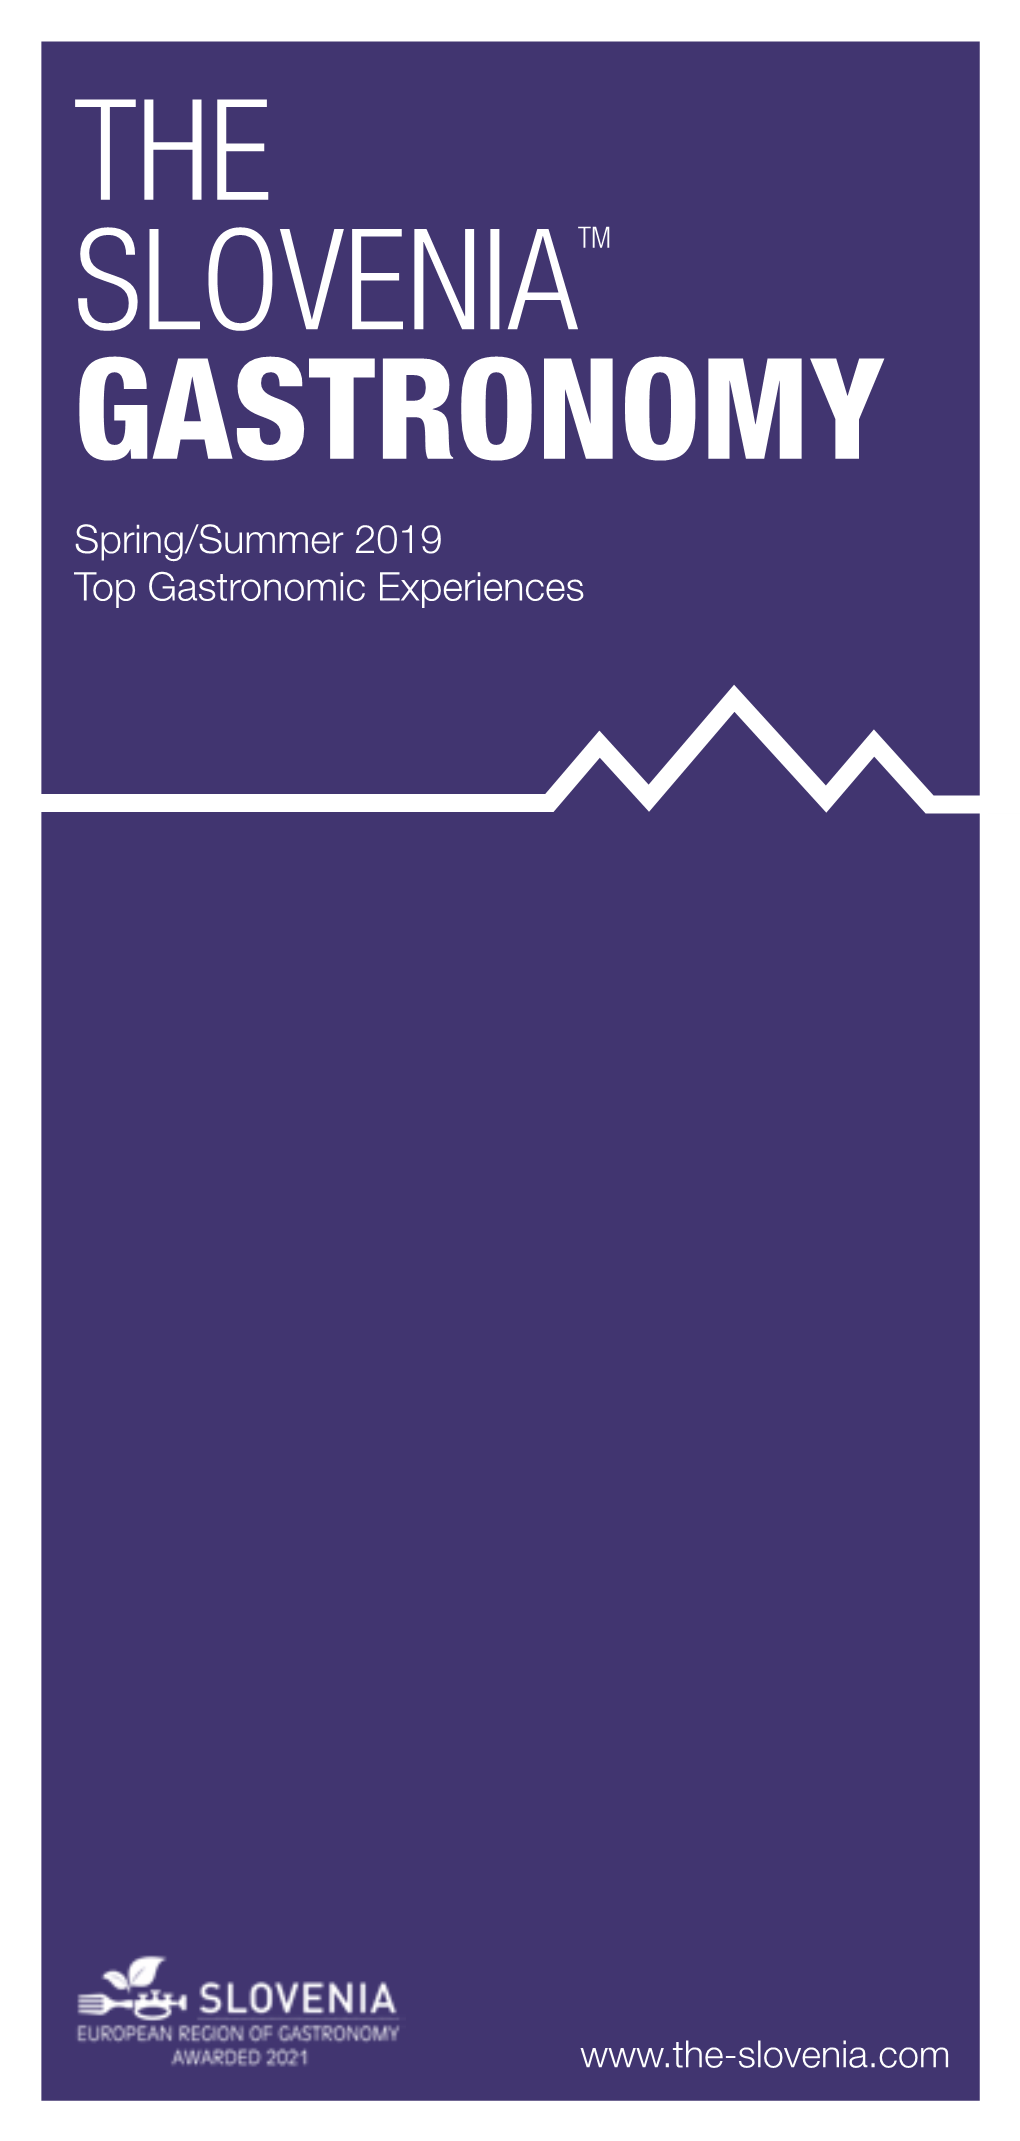 THE SLOVENIATM GASTRONOMY Spring/Summer 2019 Top Gastronomic Experiences